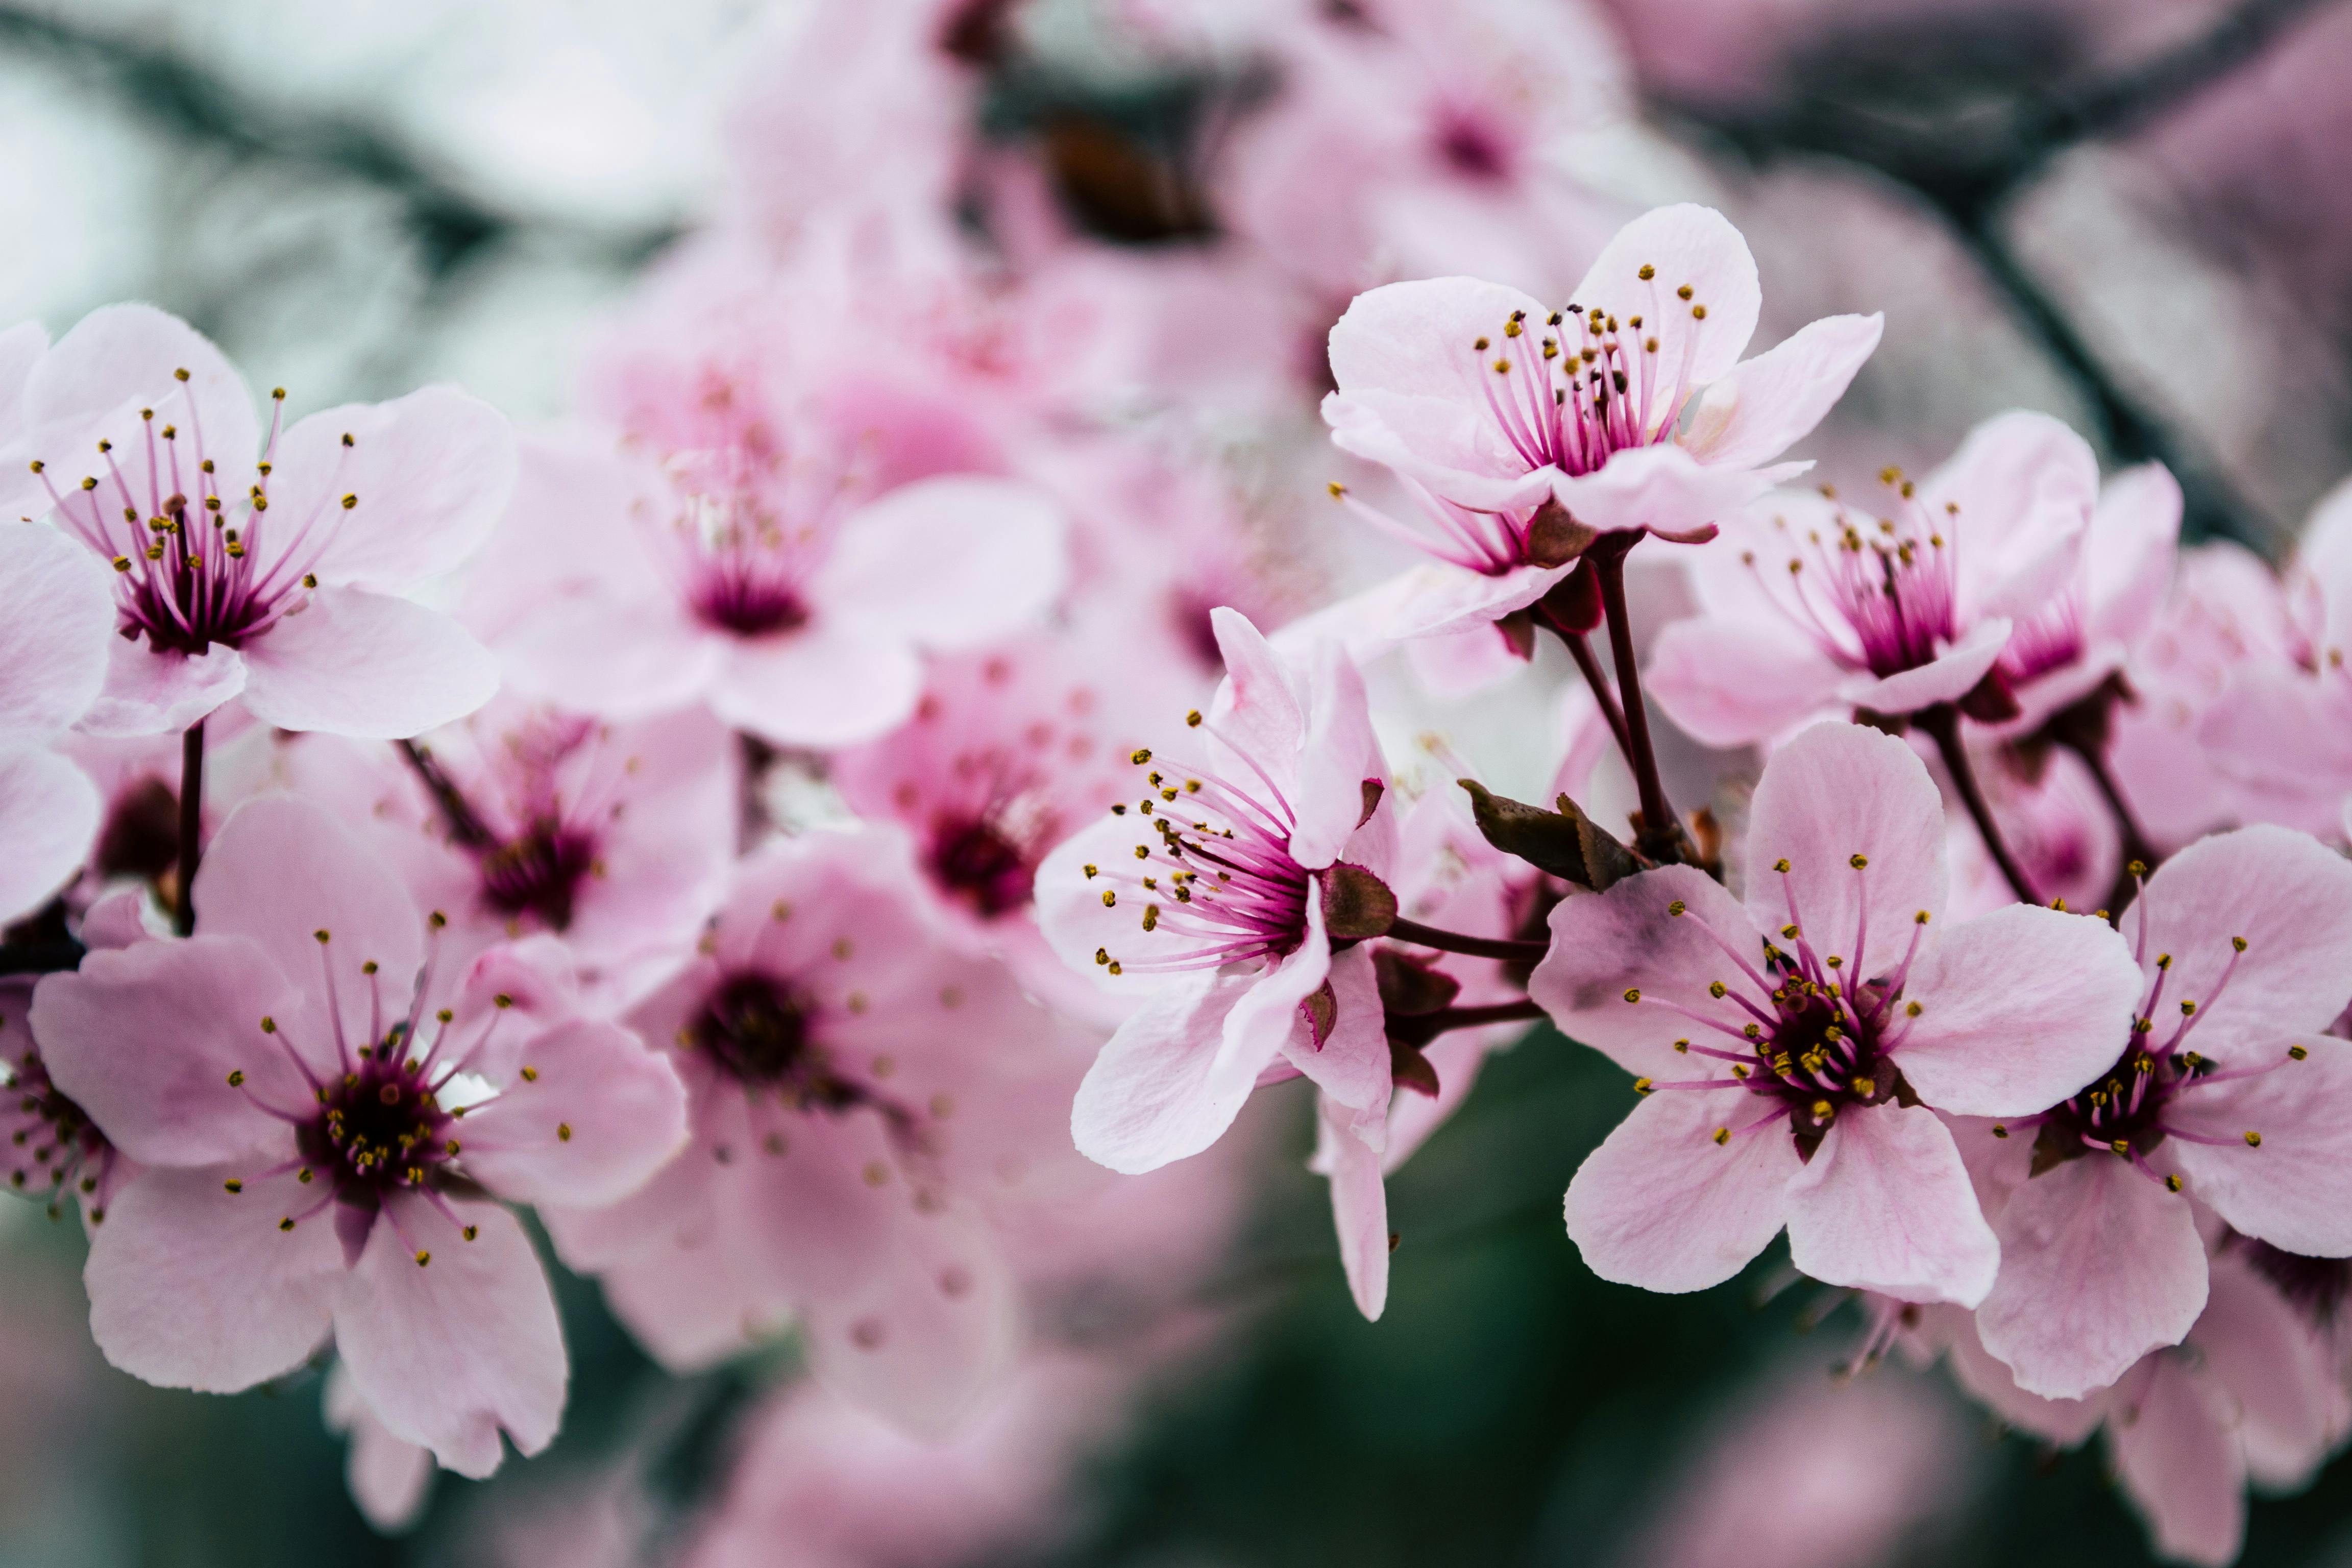 Pink Cherry Blossoms Flowers - Free stock photo on Pixabay - Pixabay